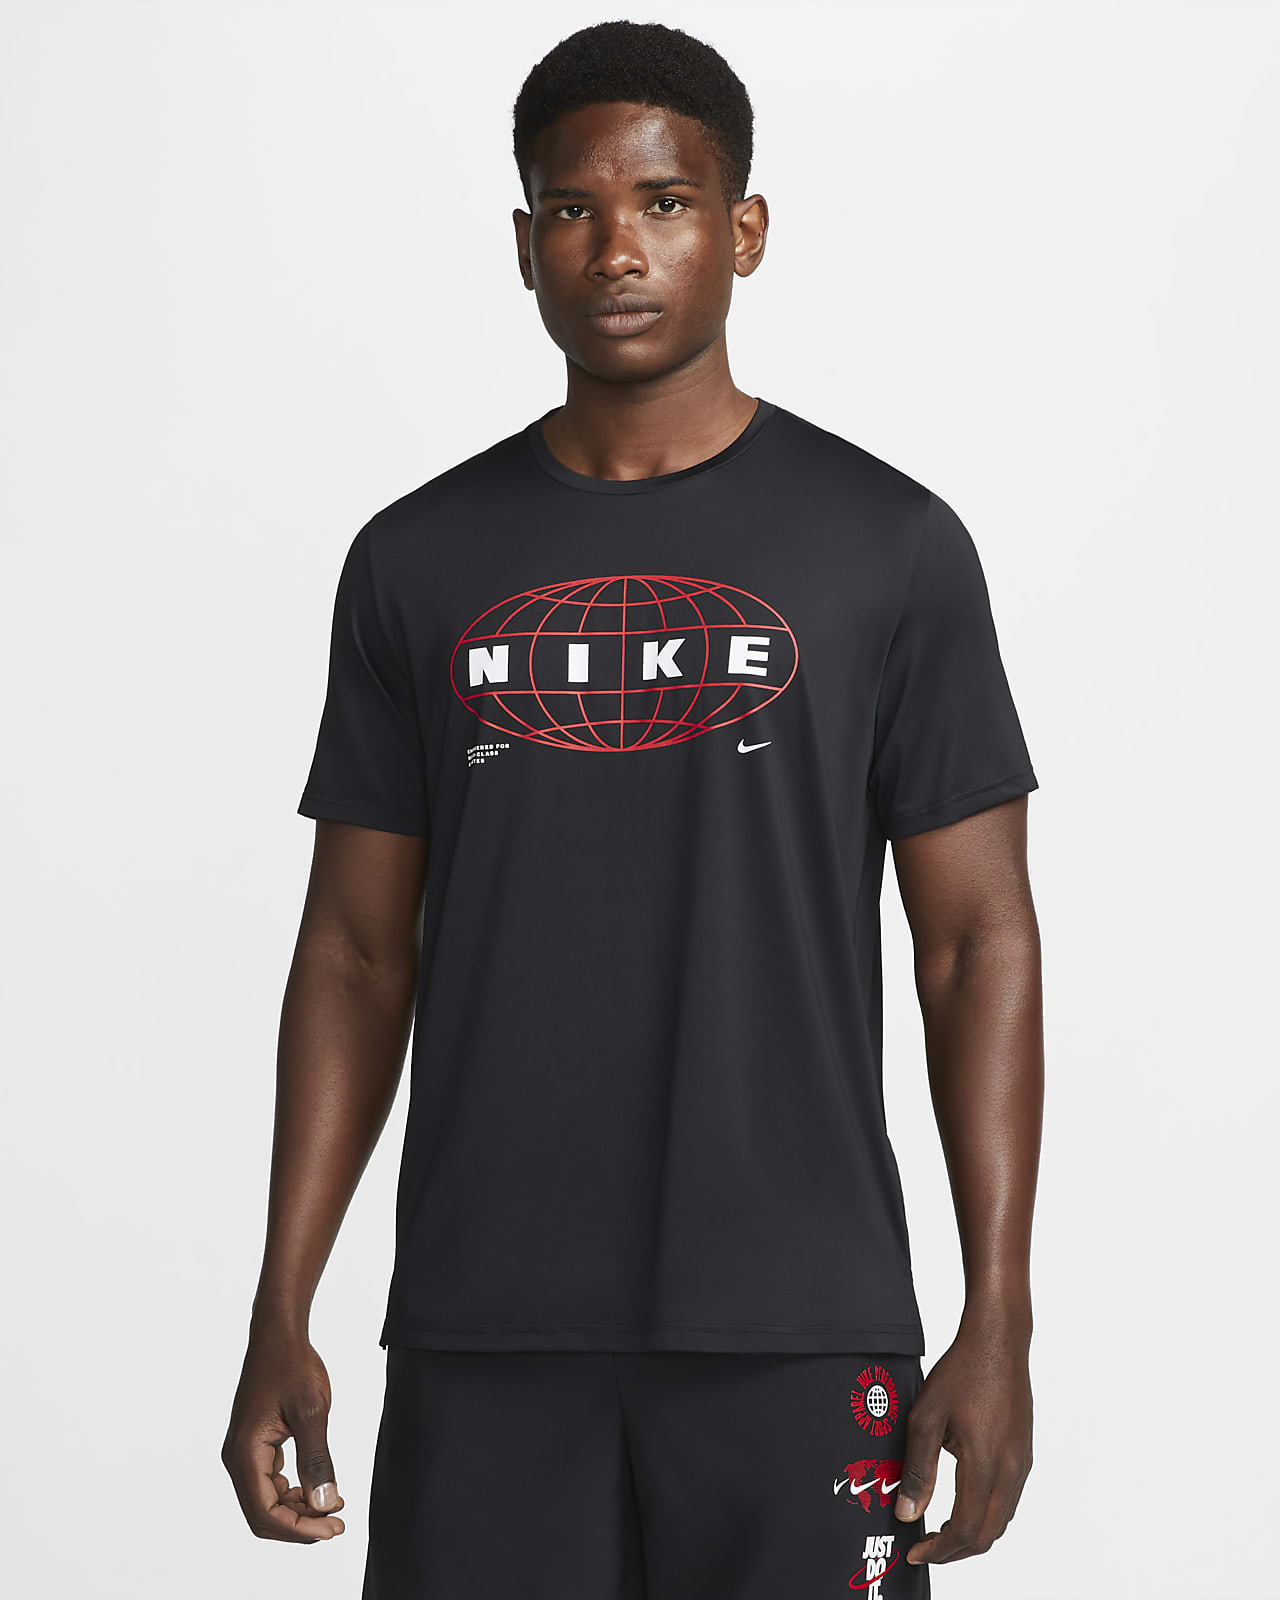 Nike Pro Dri-FIT Men's Graphic Short-Sleeve Top